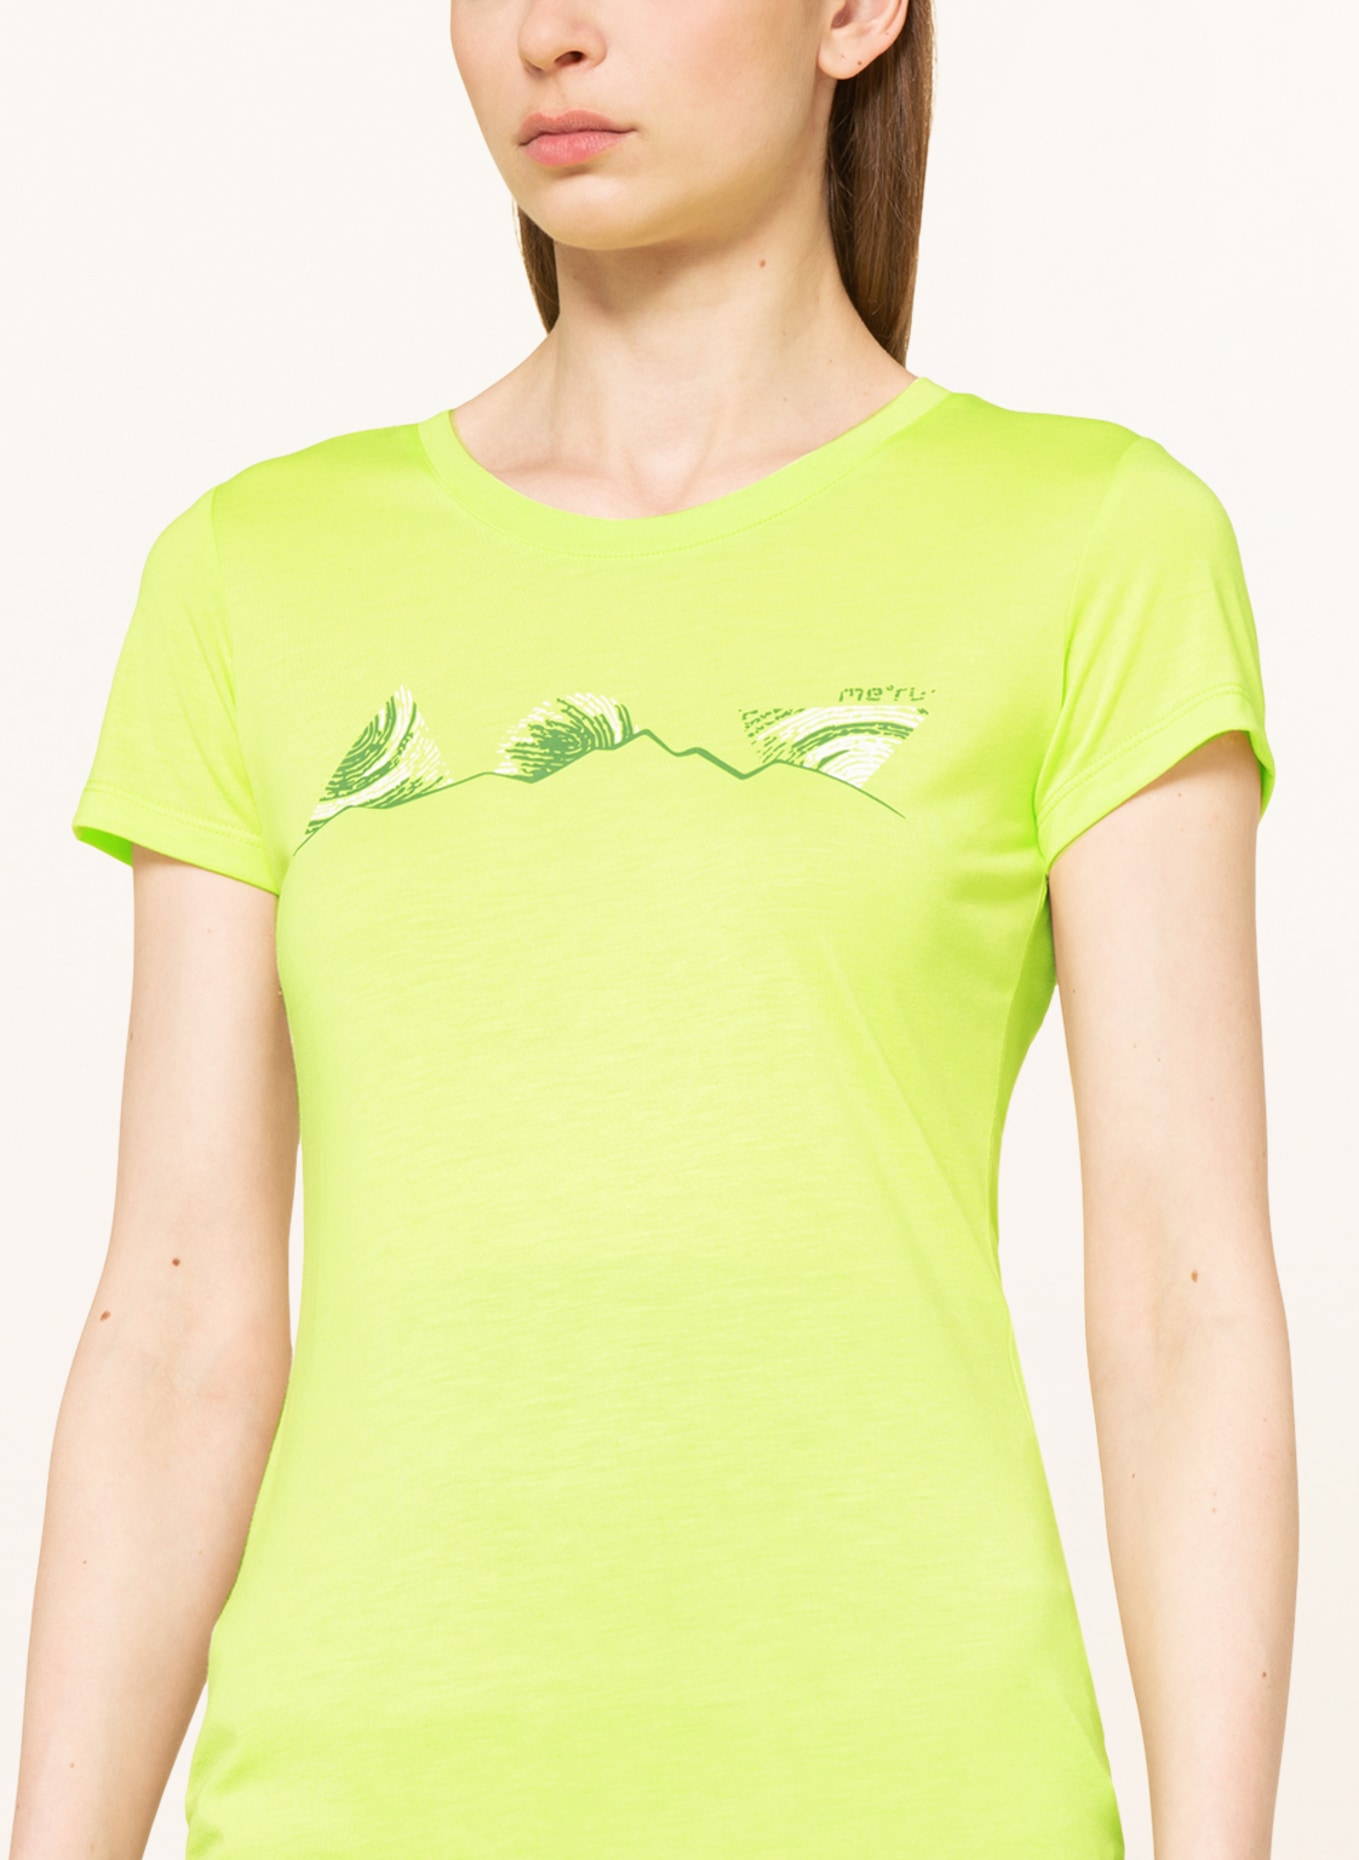 me°ru' T-shirt GREVE, Color: YELLOW (Image 4)